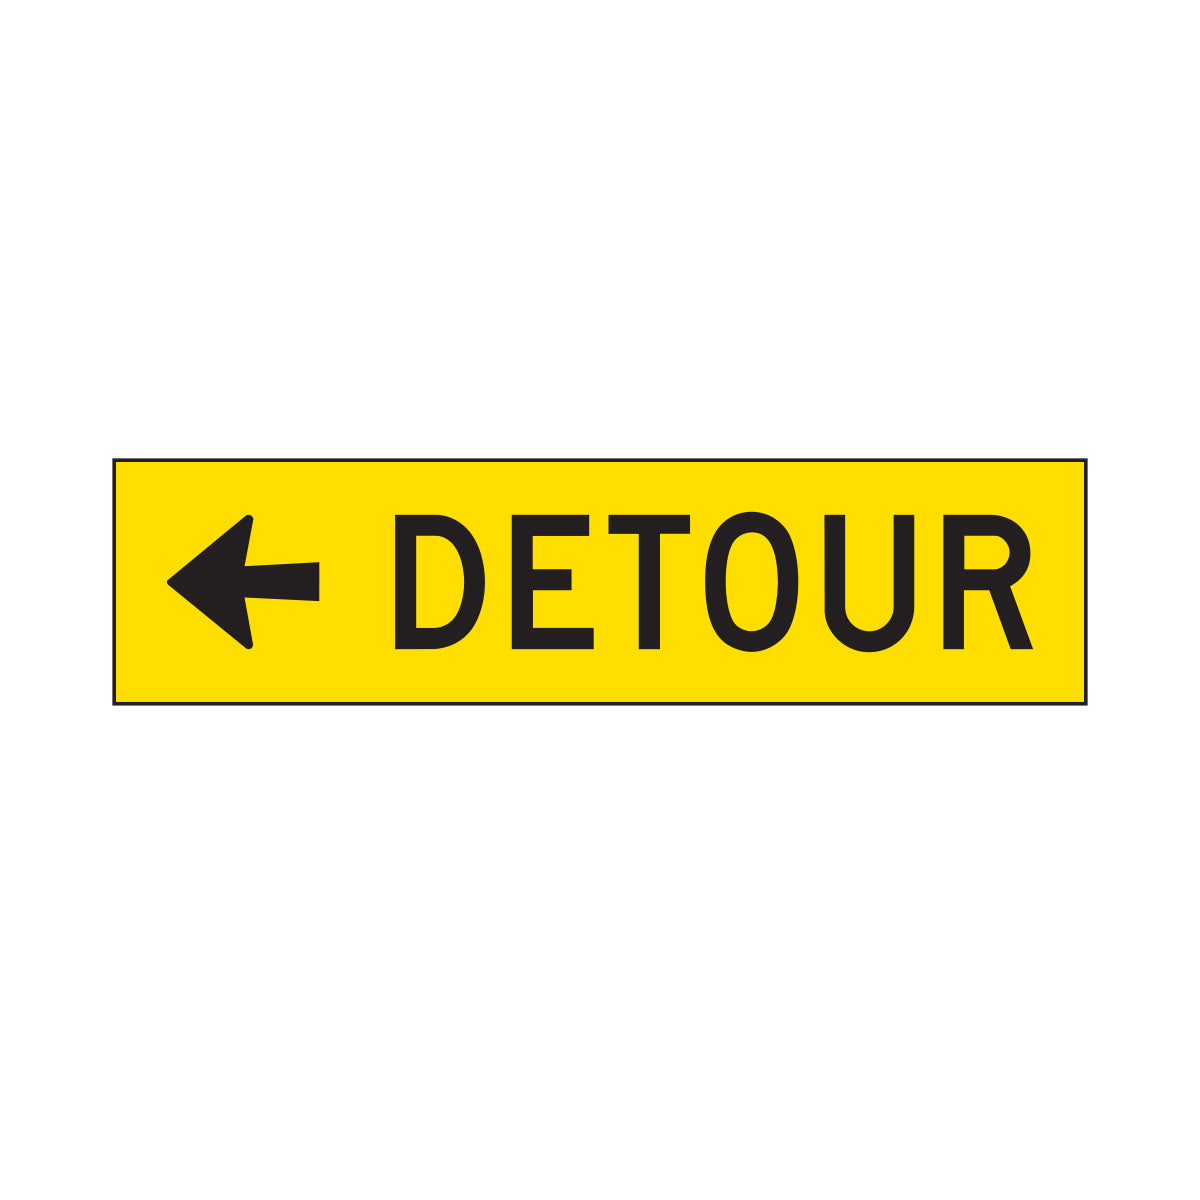 Detour Sign - Left